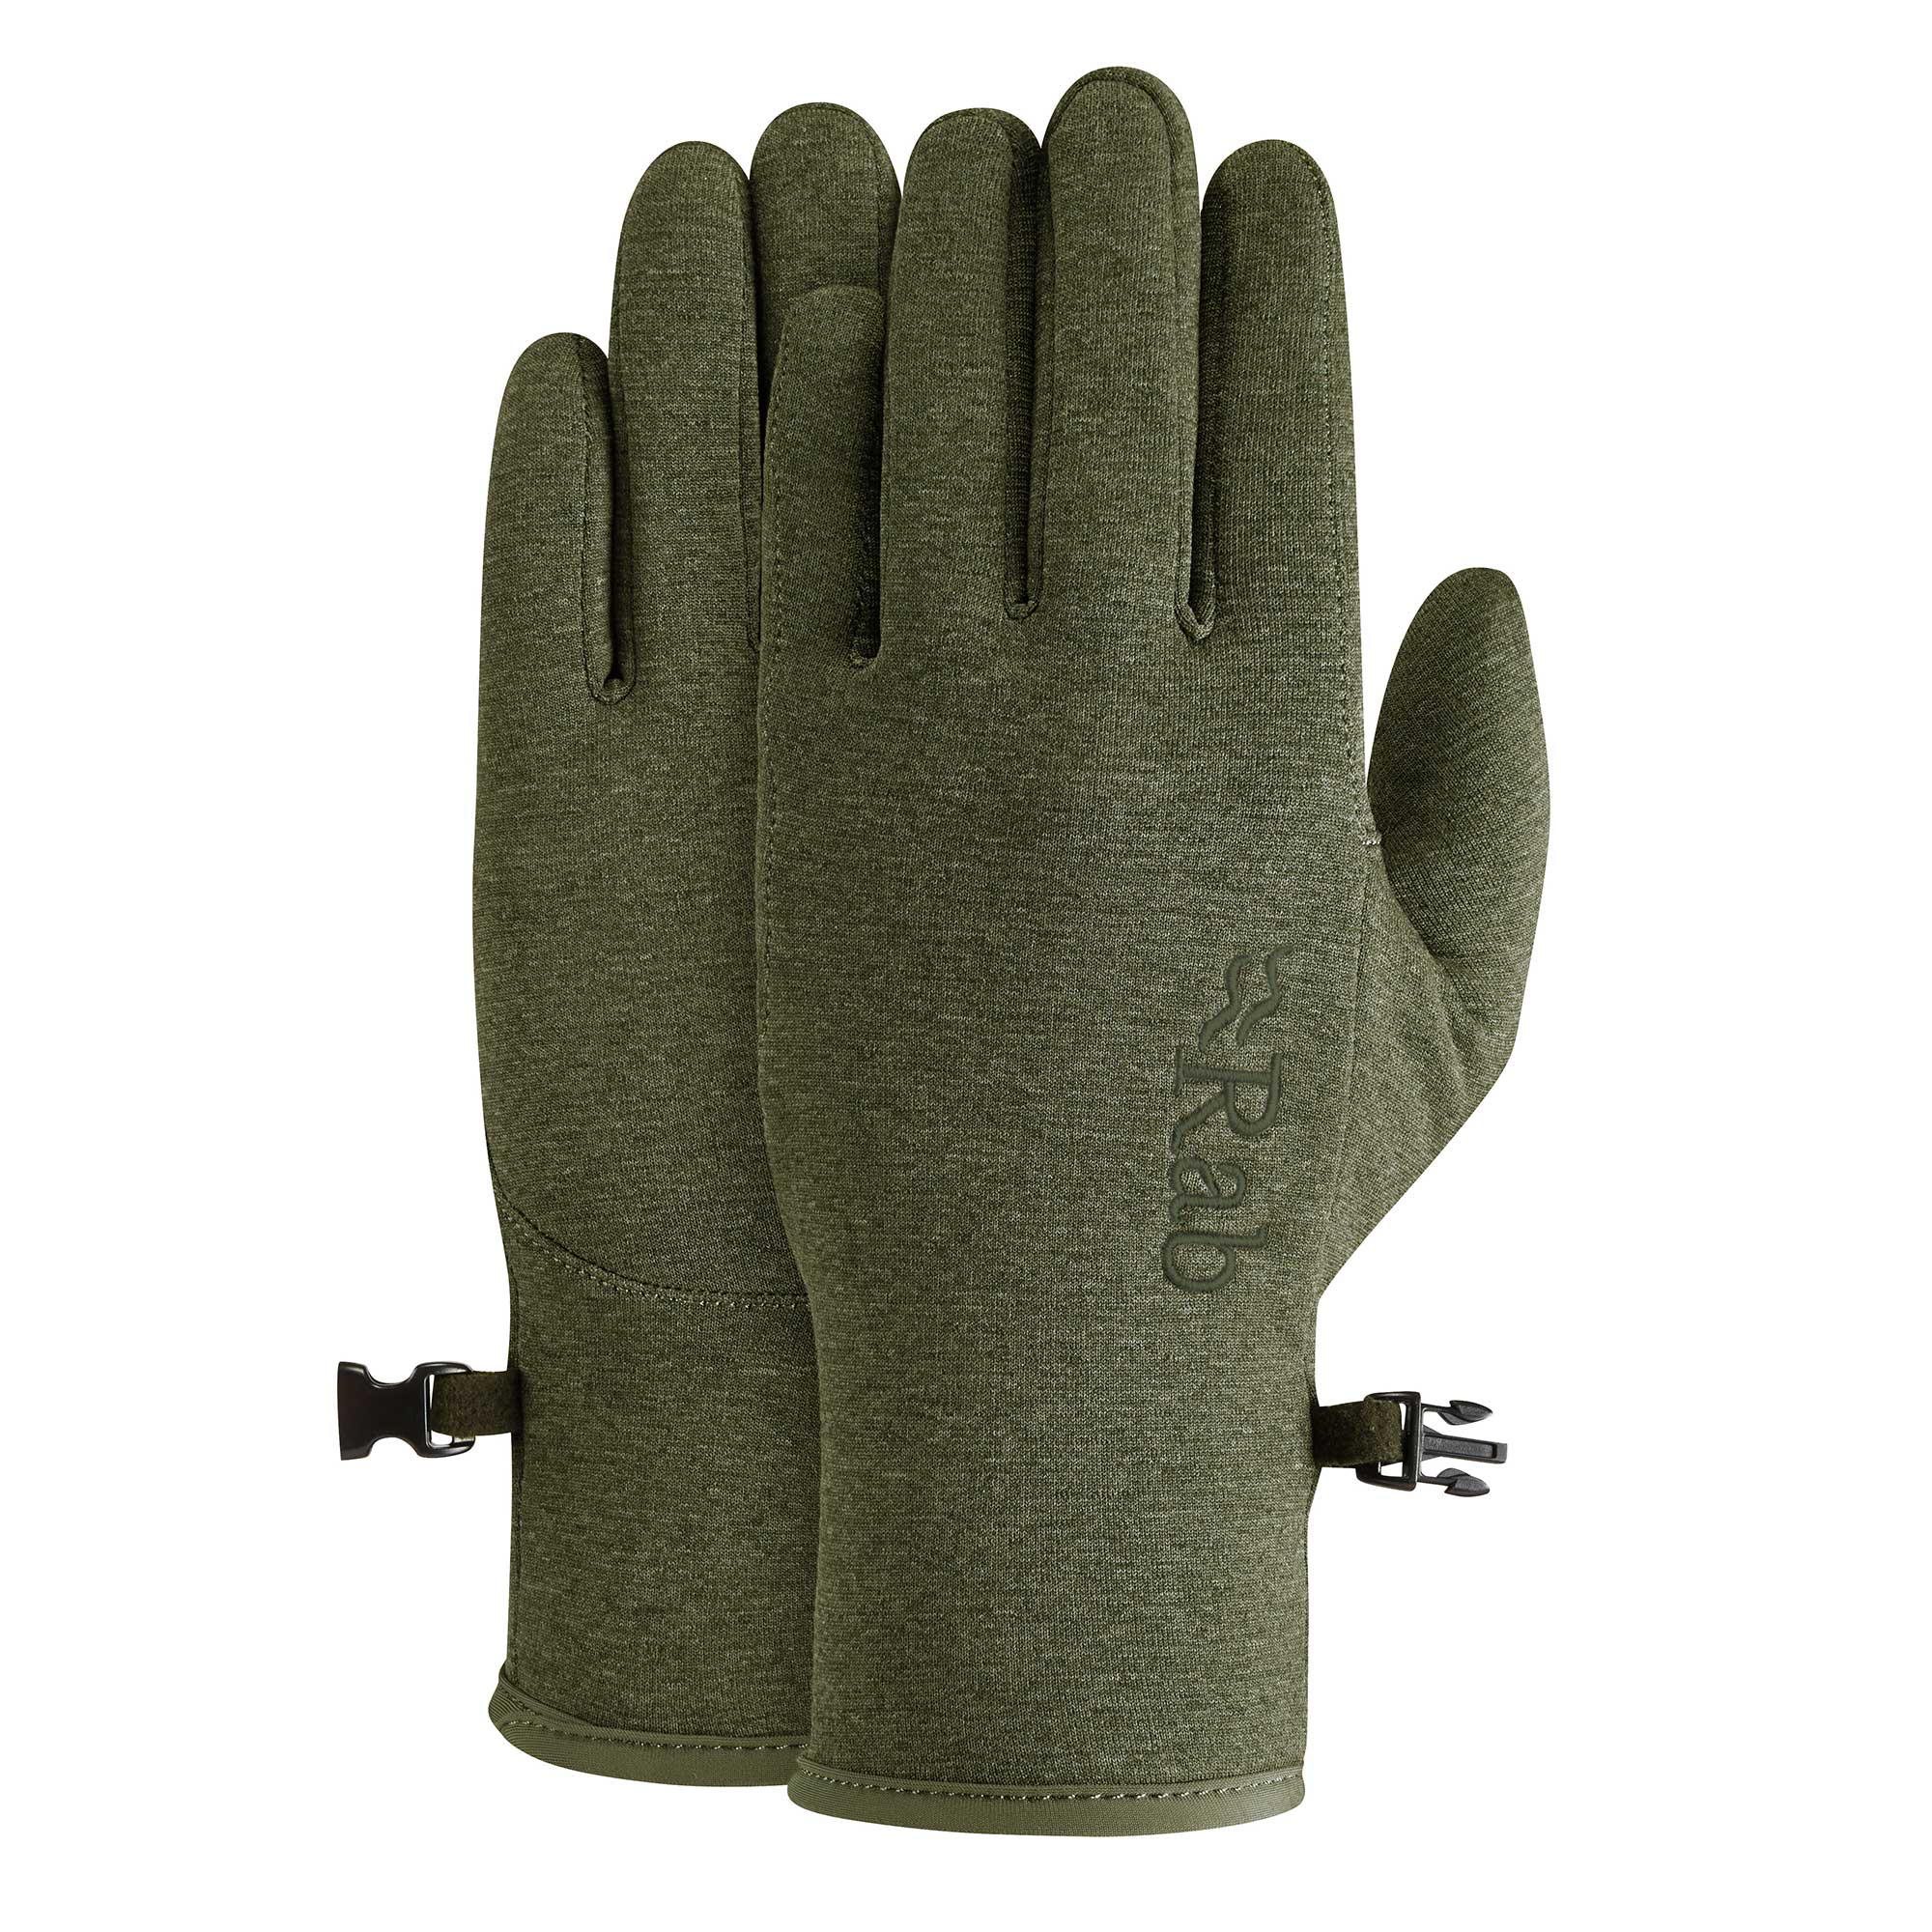 Rab Forge Gloves, UK